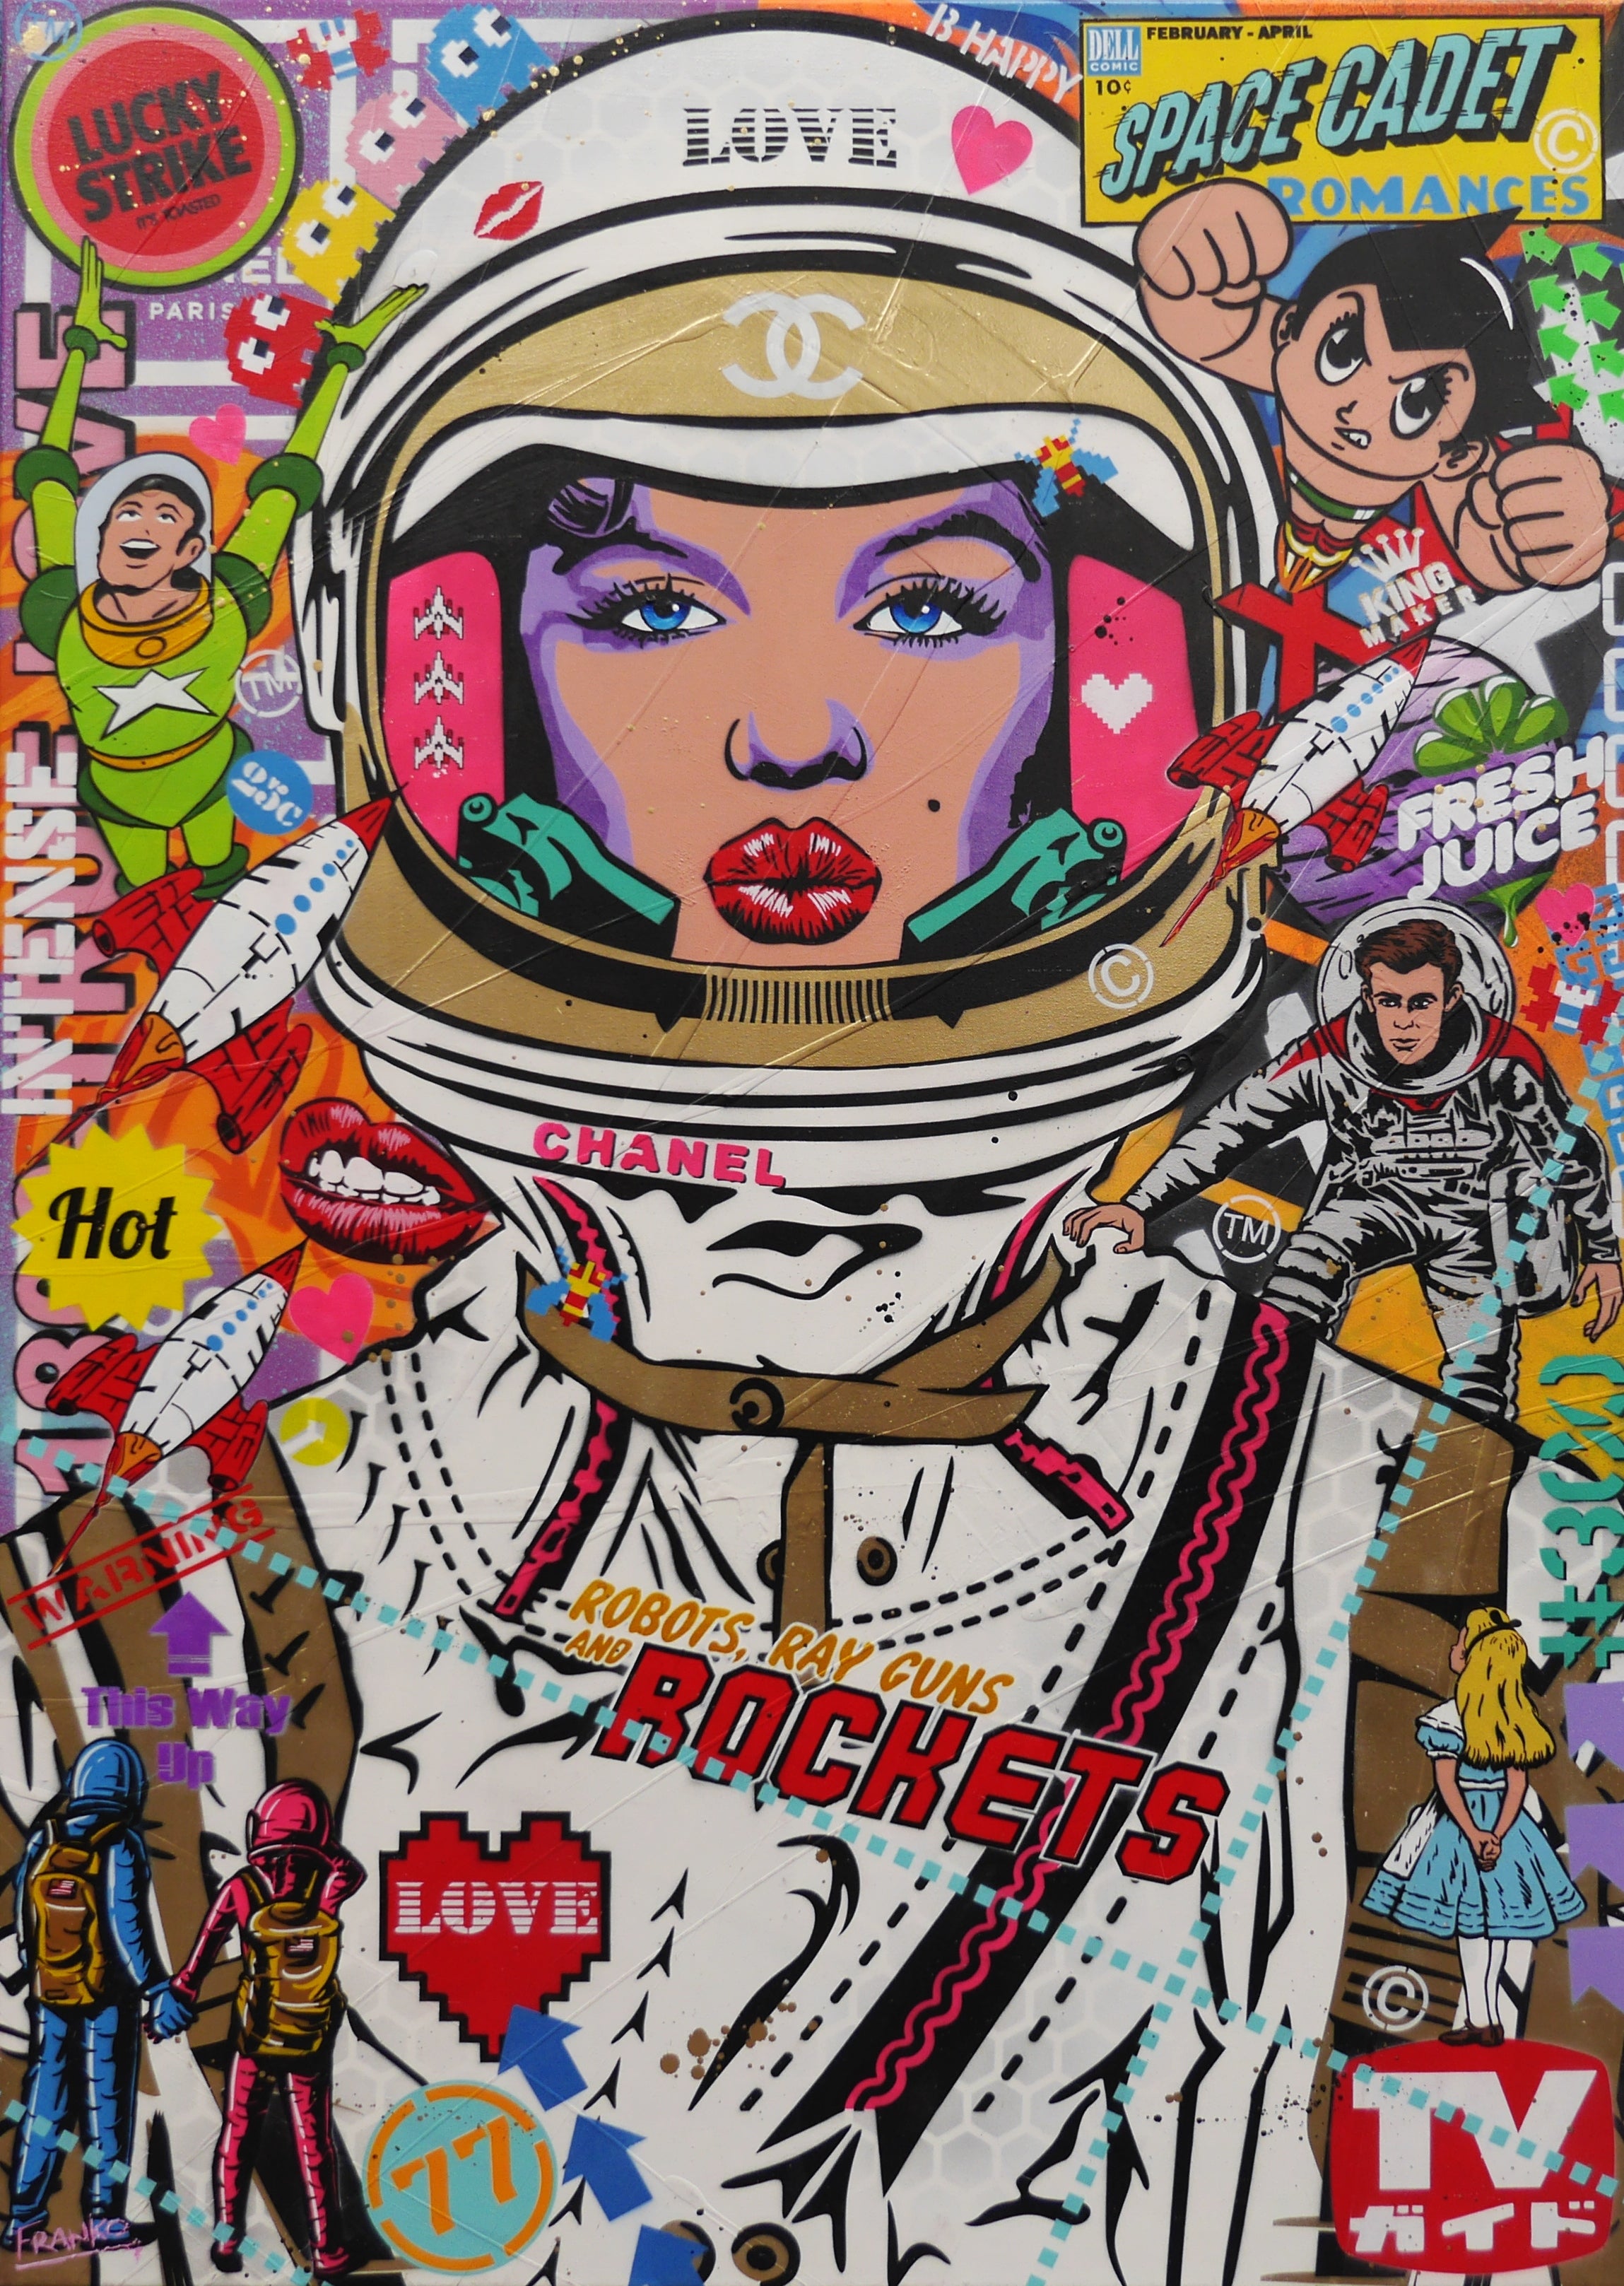 Space Cadet Monroe 140cm x 100cm Textured Urban Pop Art Painting